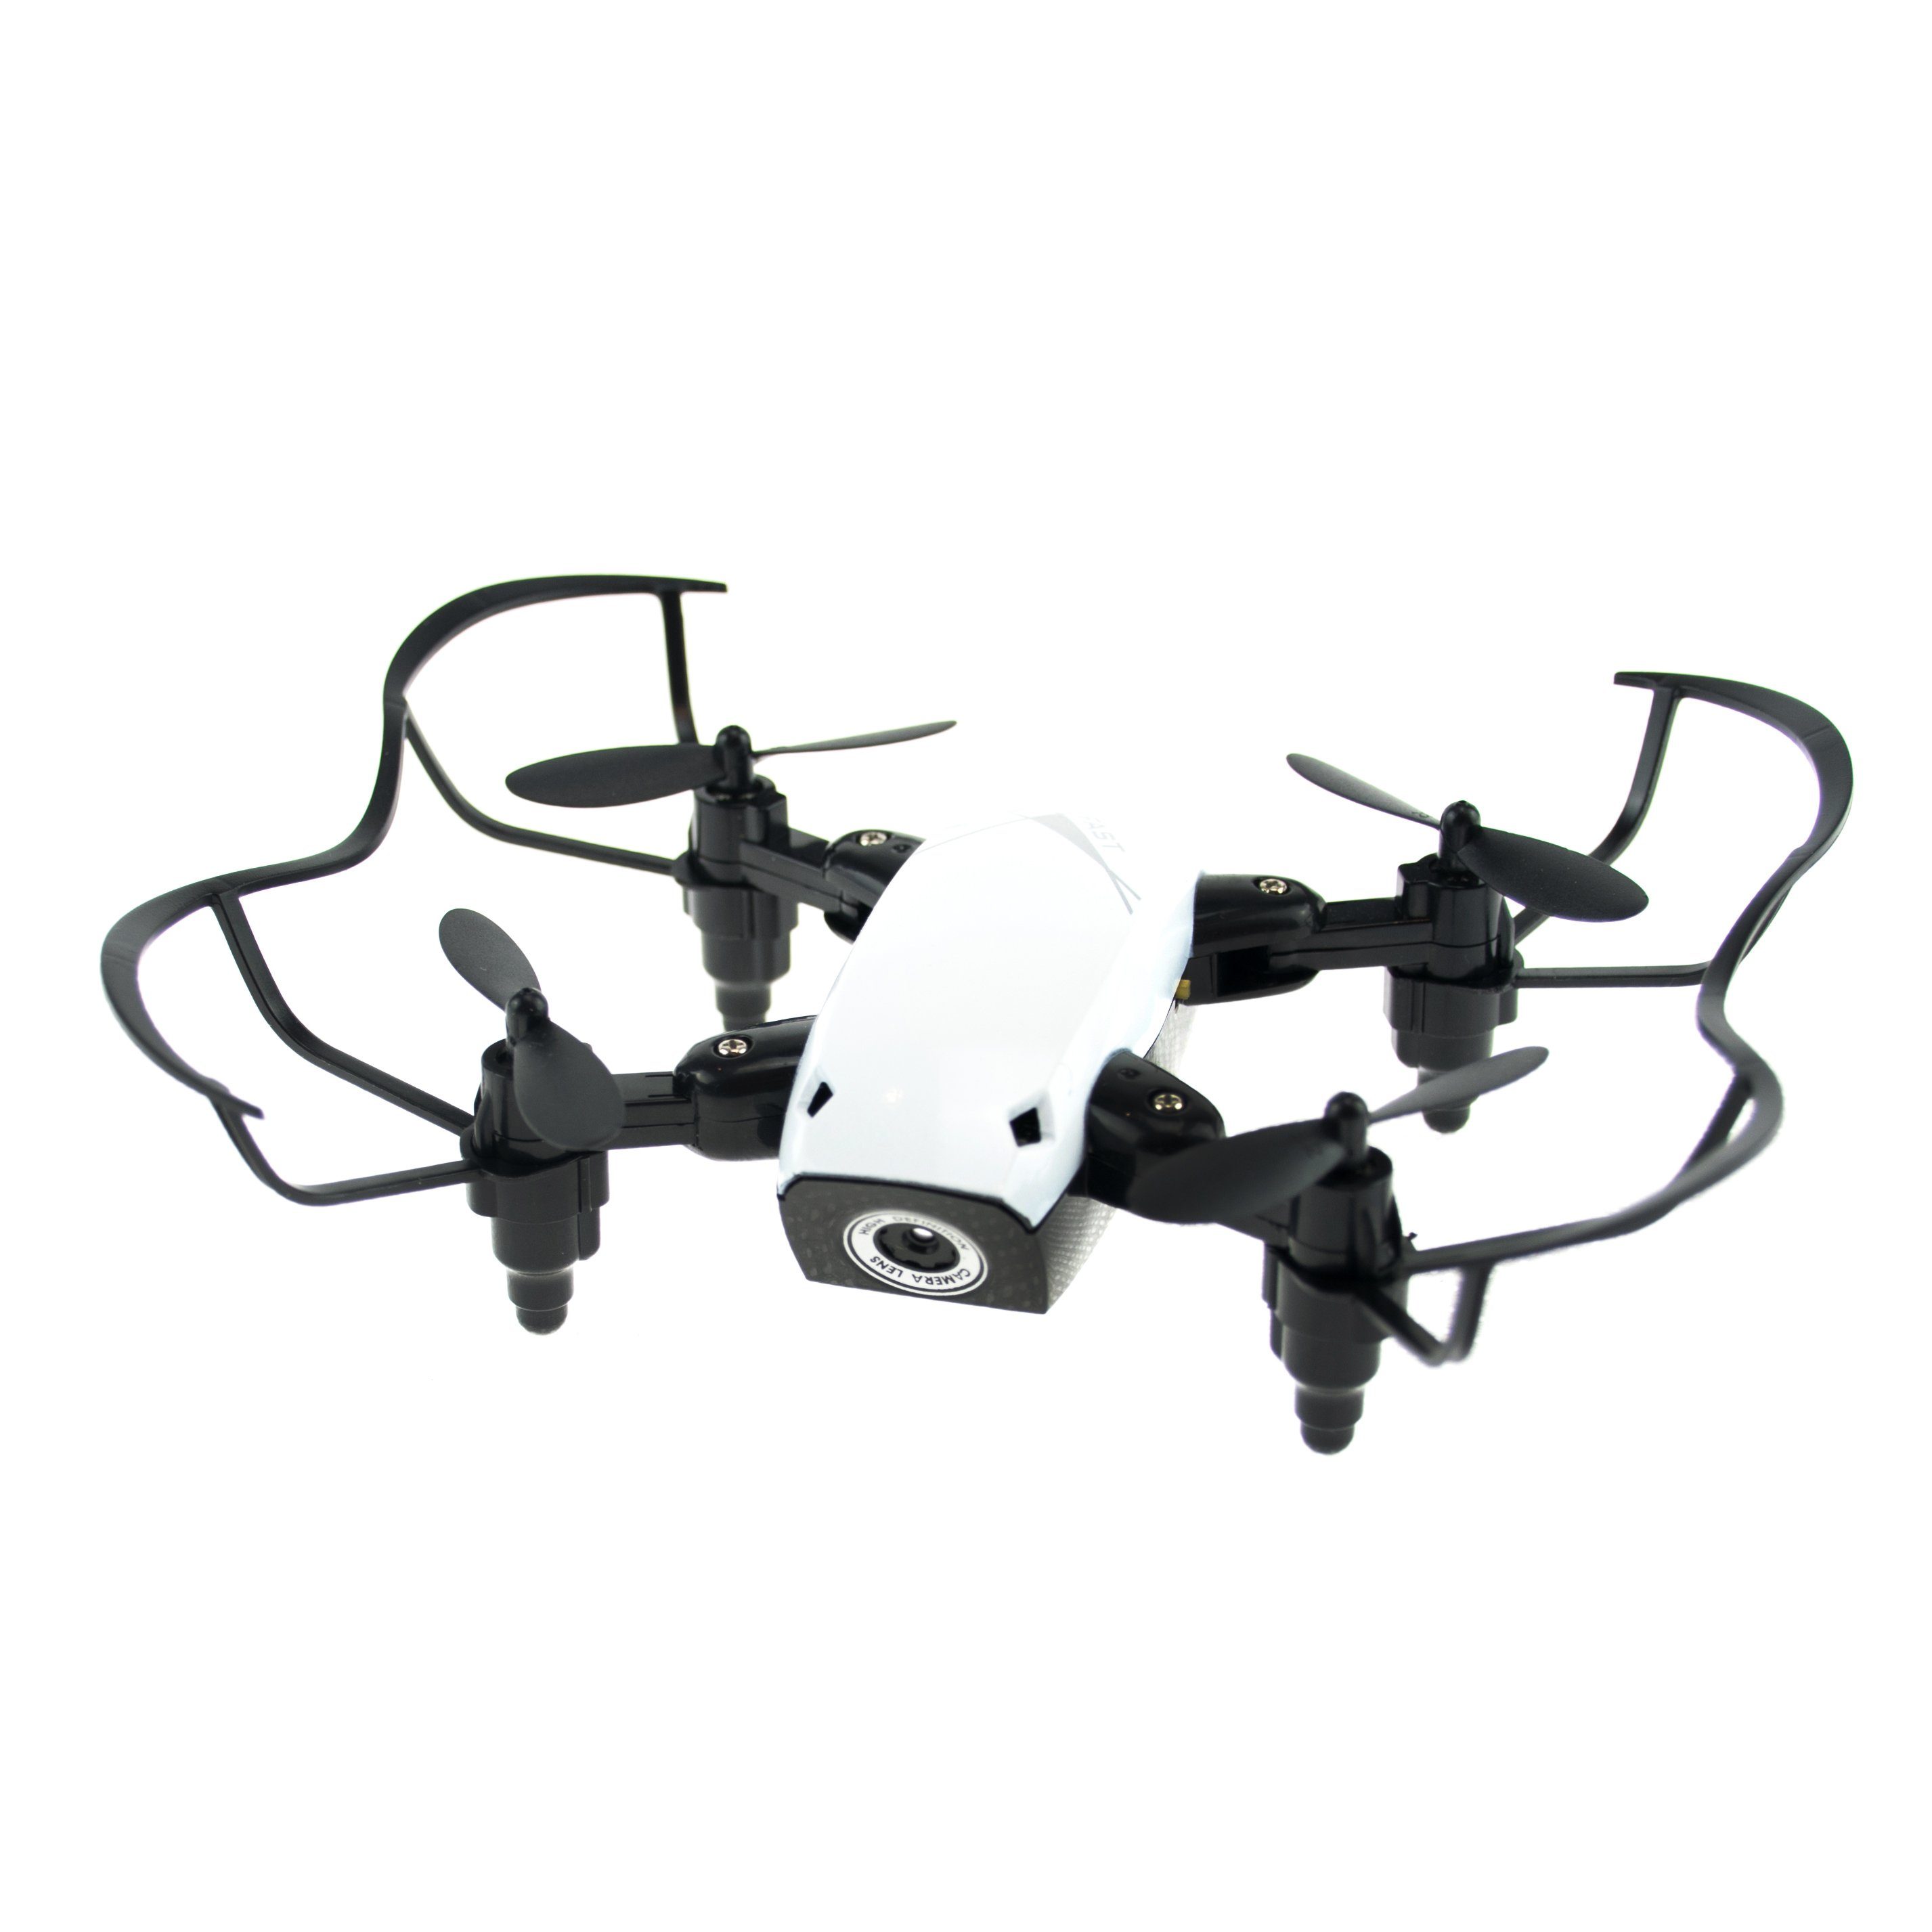 - / Start&Landen RC-Quadrocopter S9W Höhe-Halten Auto. efaso Drohne faltbar Kamera 3-Speed-Stufen, / / / Headless WiFi Mini weiss One-Key-Return RC Mode /